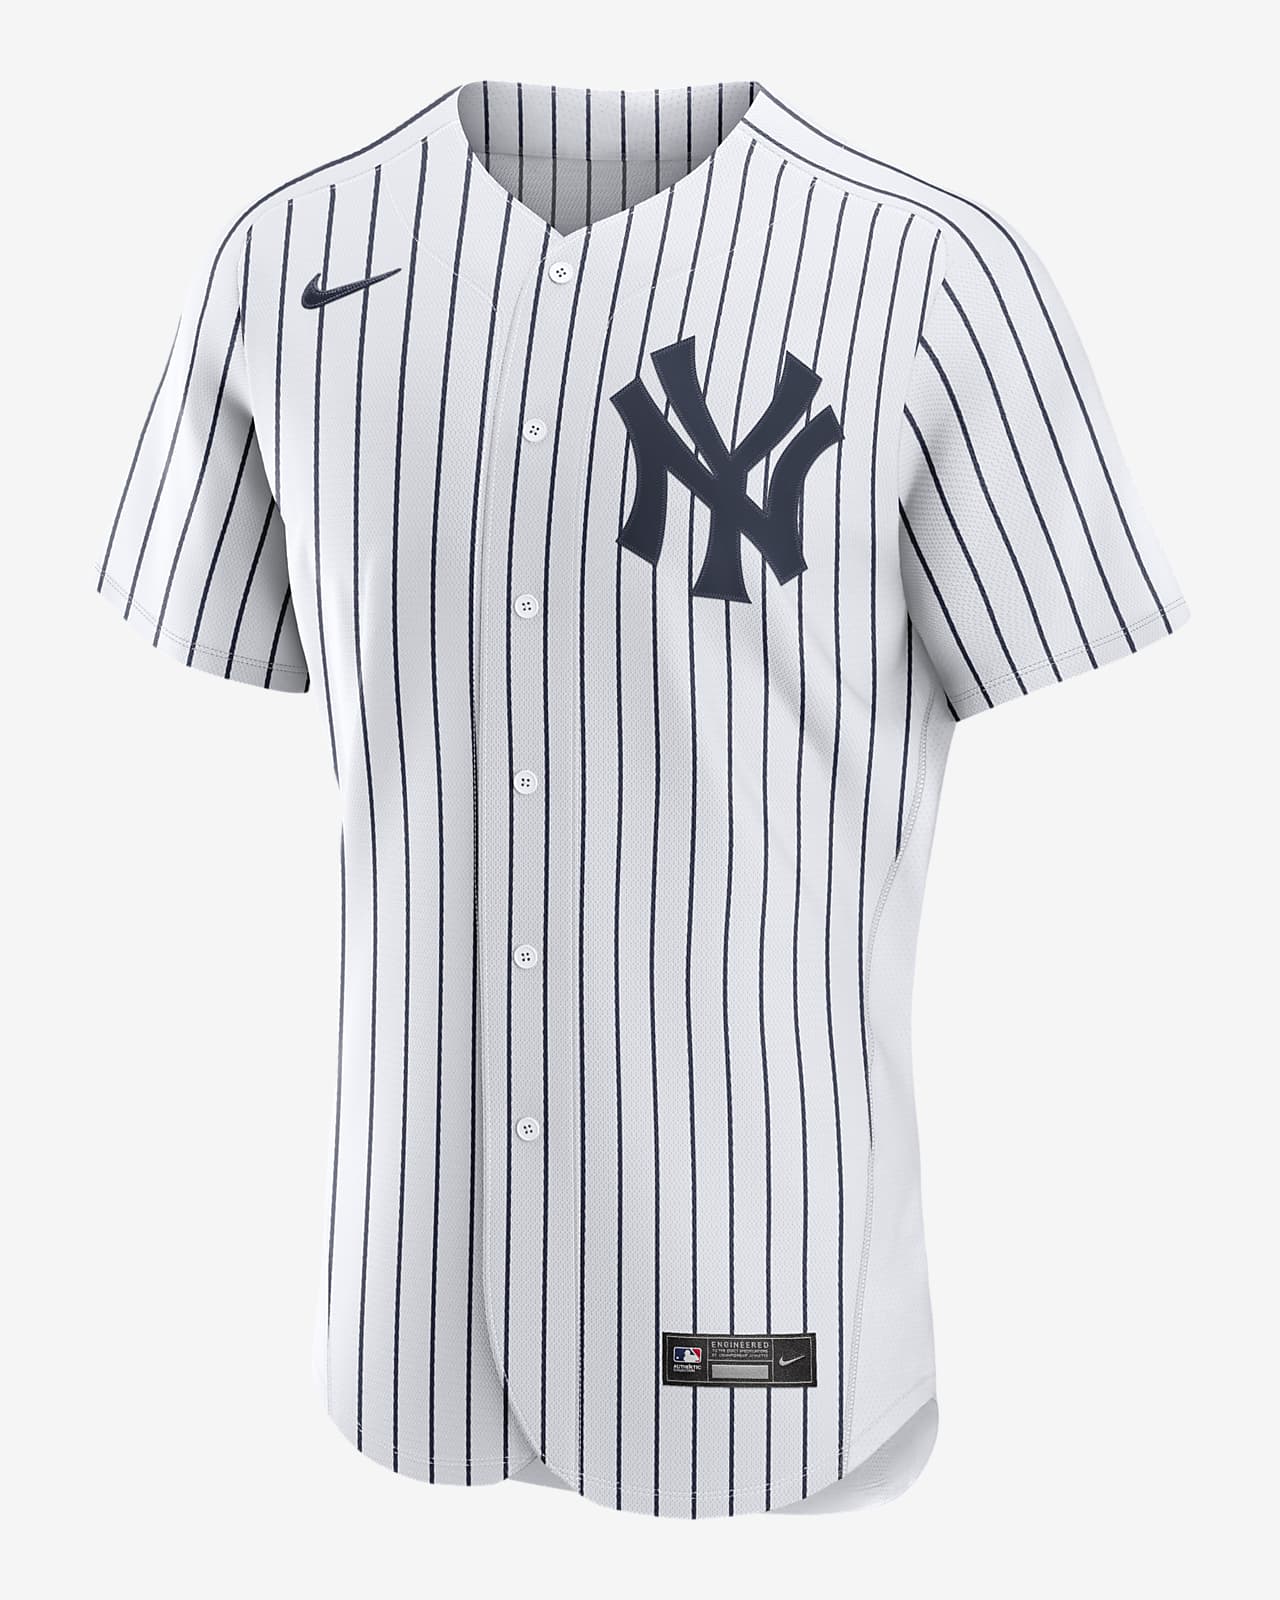 Juan Soto New York Yankees Men's Nike MLB Authentic Jersey